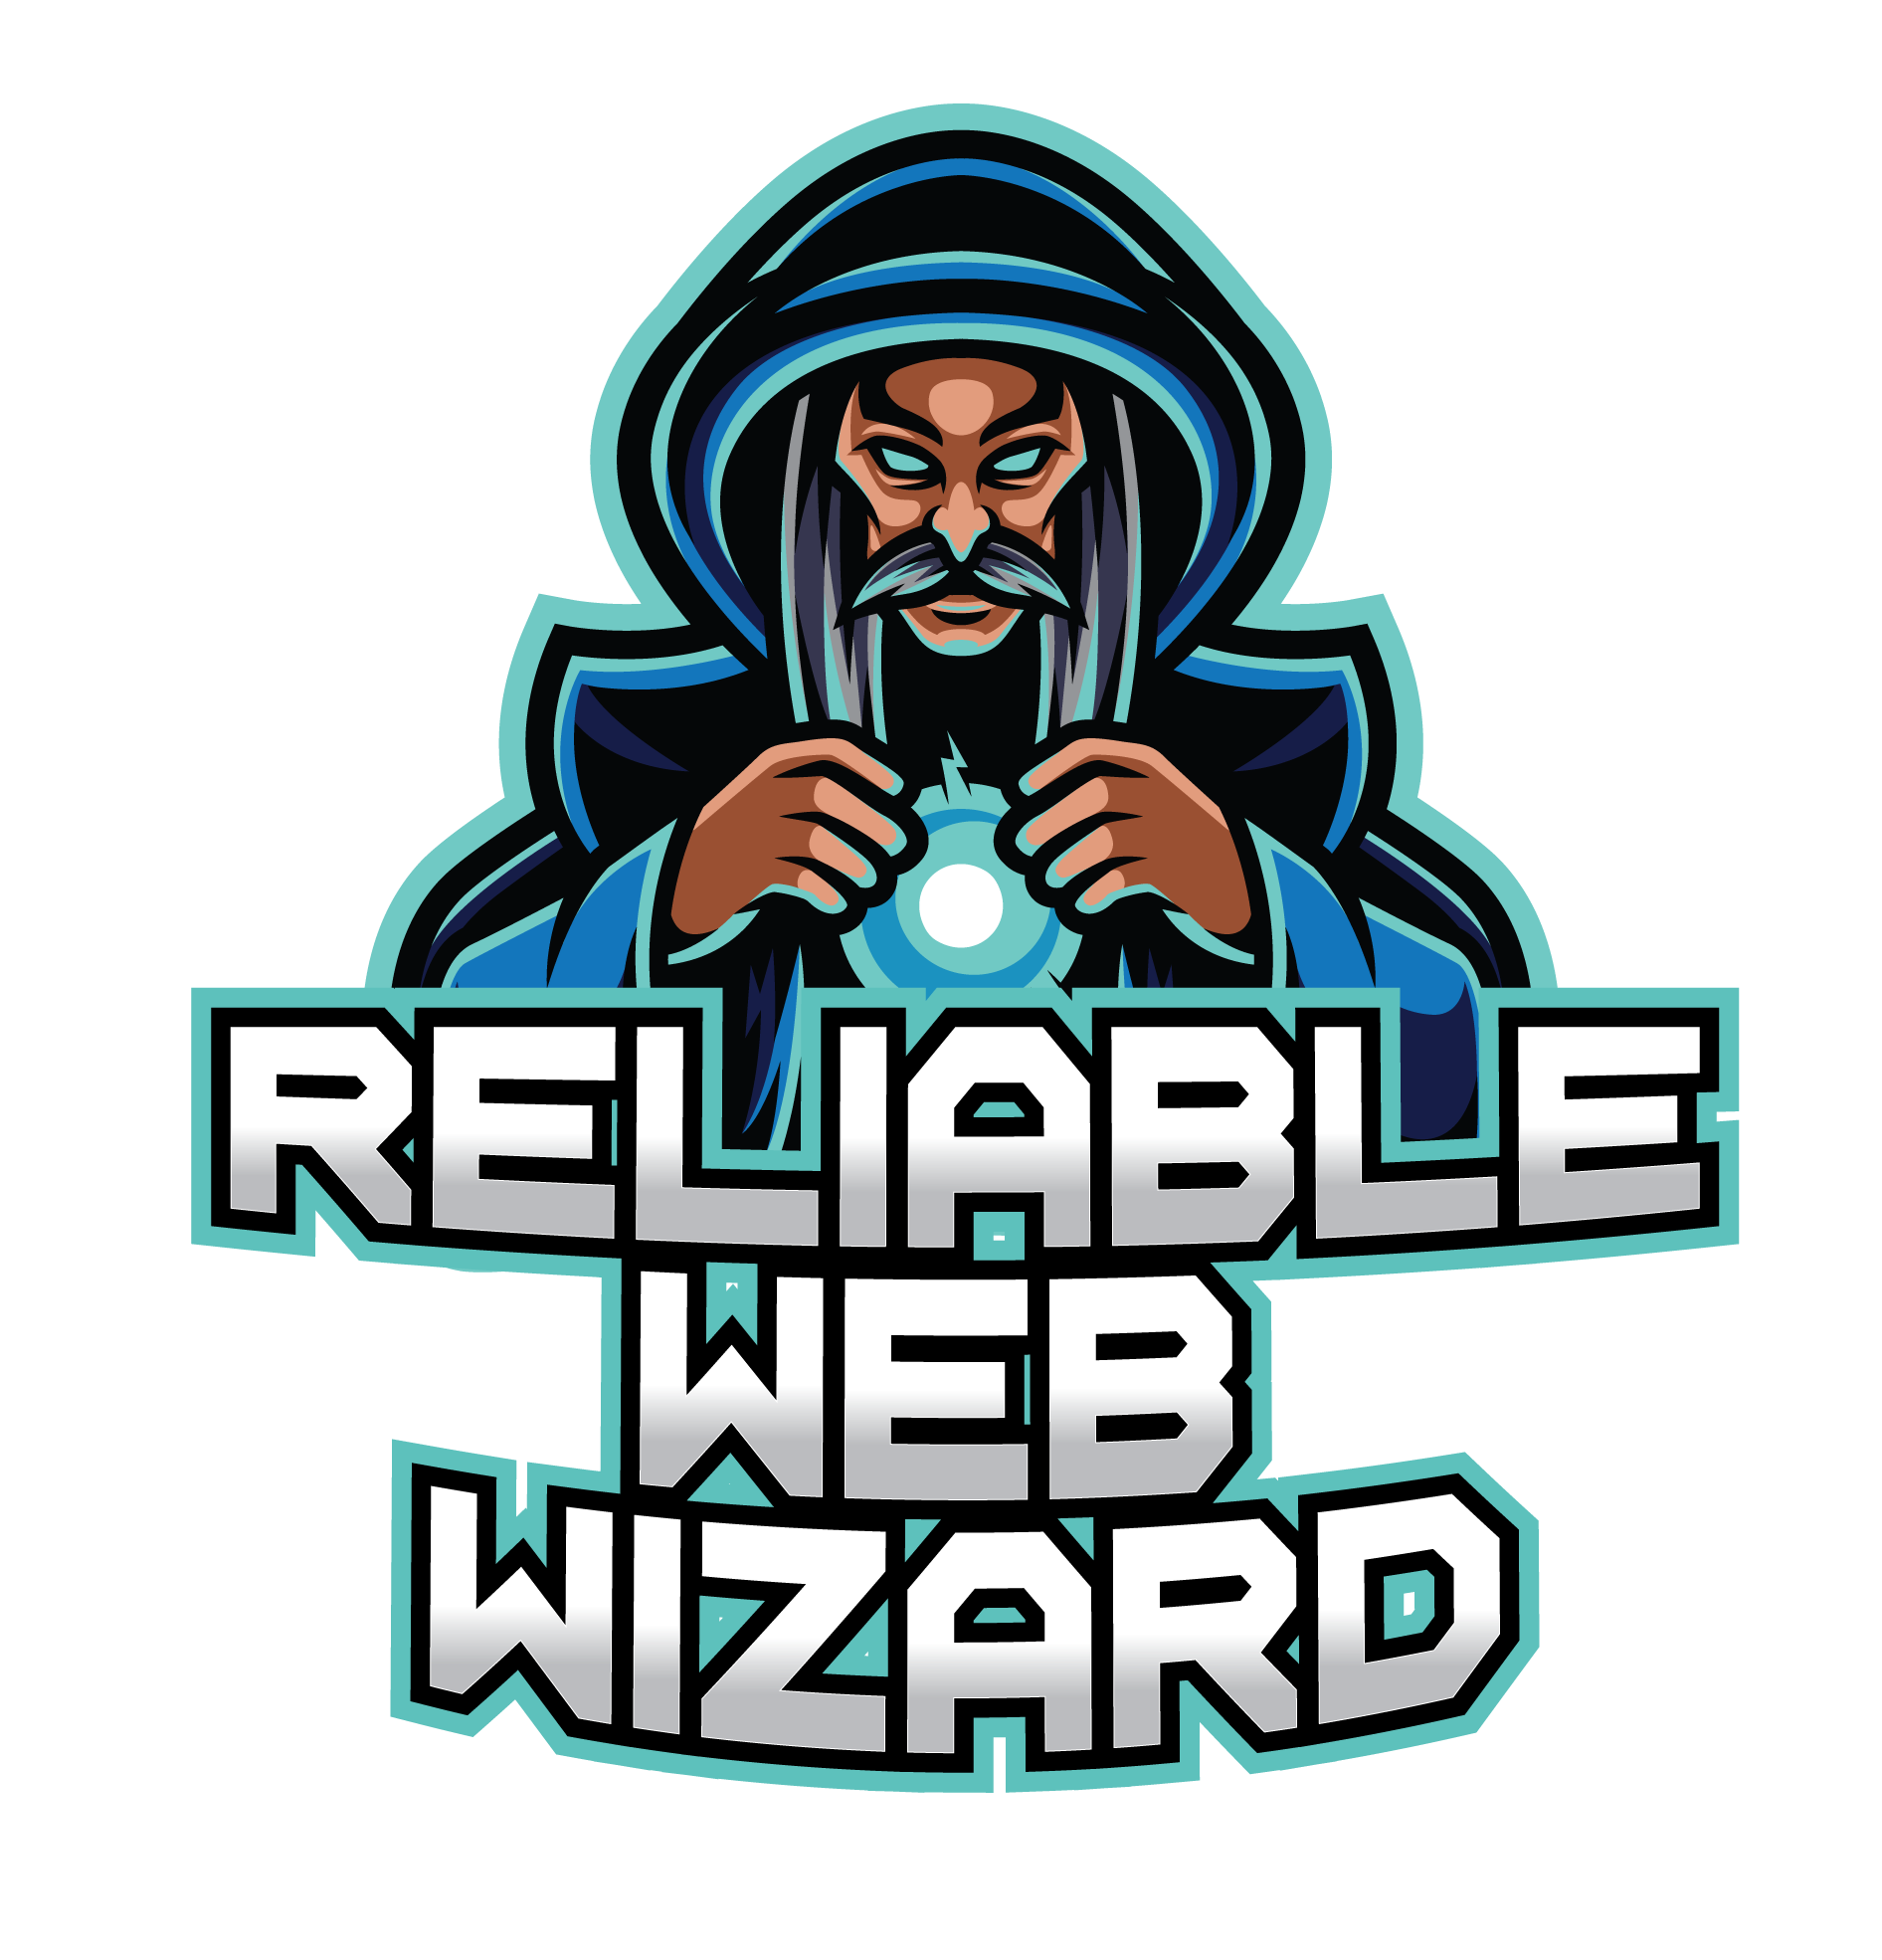 Reliable Web Wizard Design